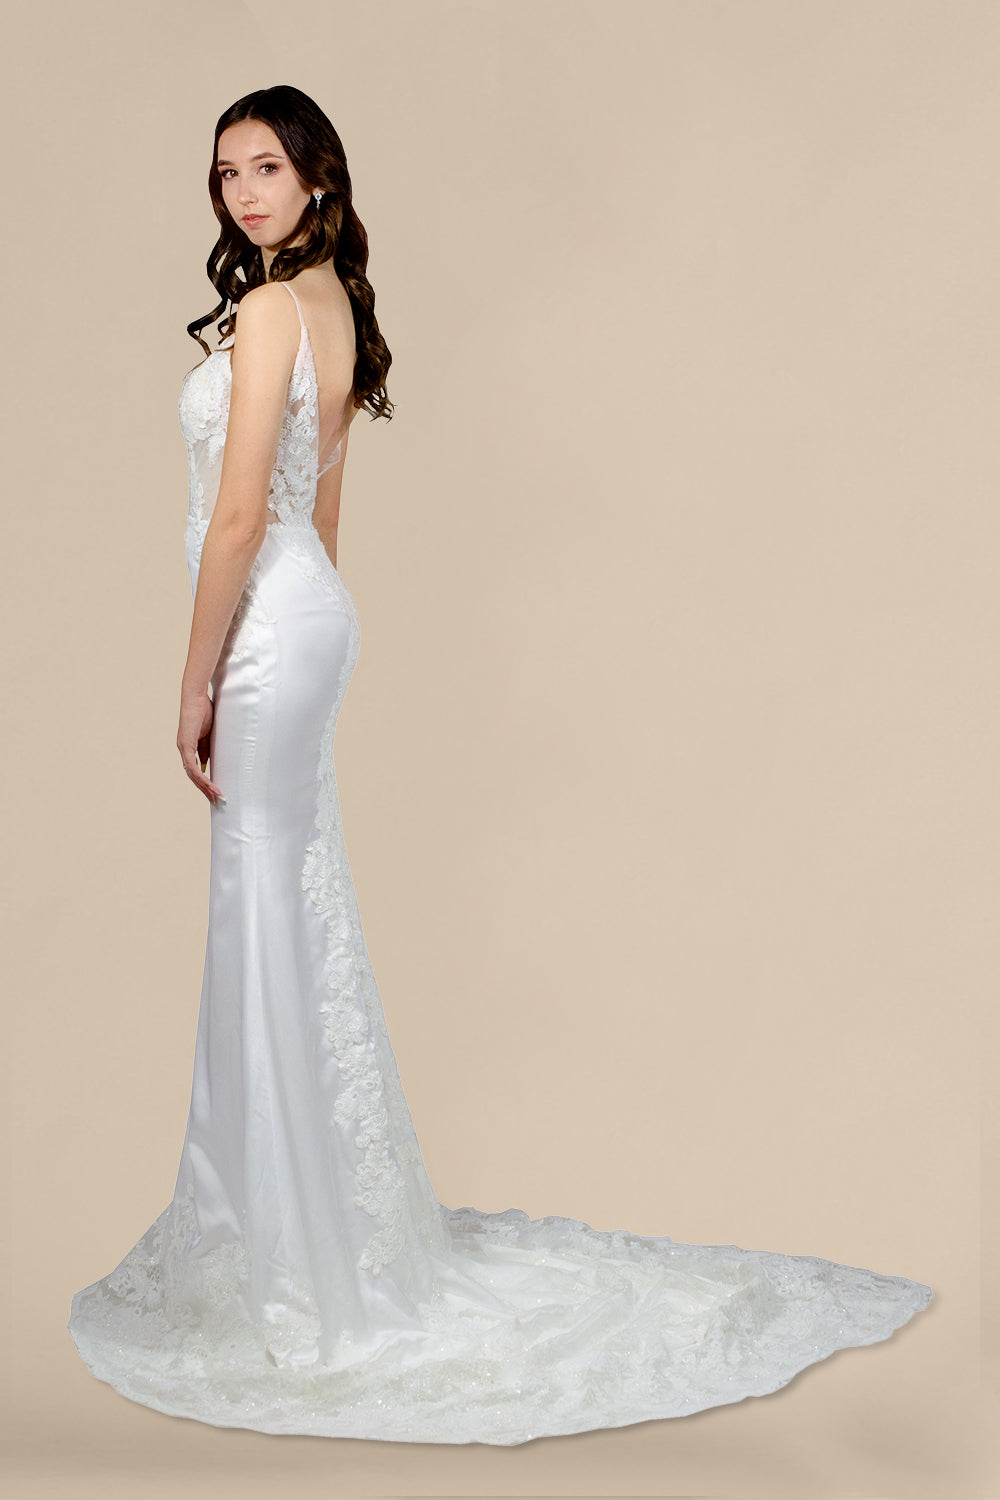 custom made silk wedding gowns australia online dressmaker envious bridal 